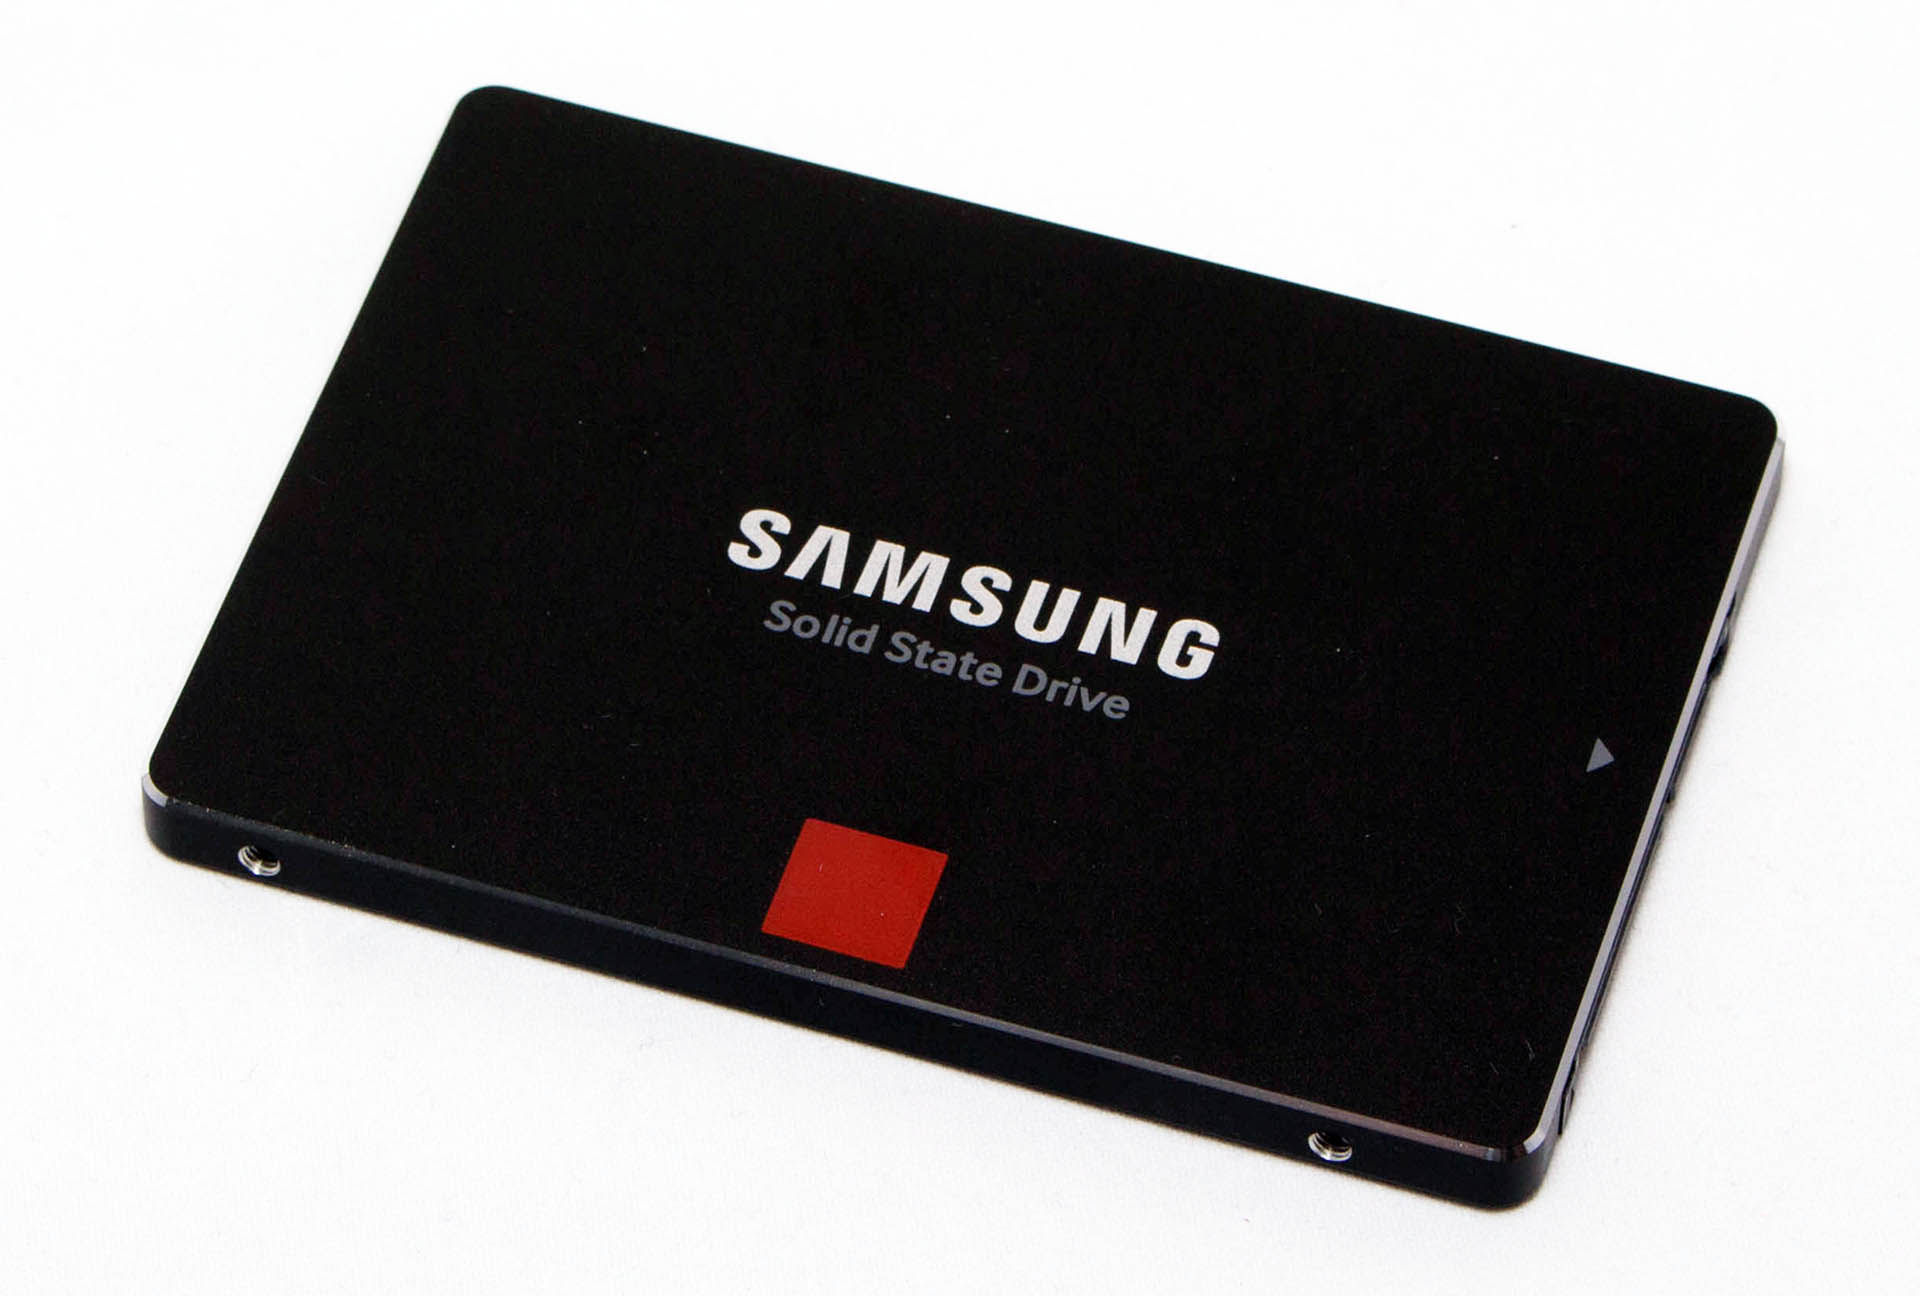 Samsung SSD 850 Pro 256GB test